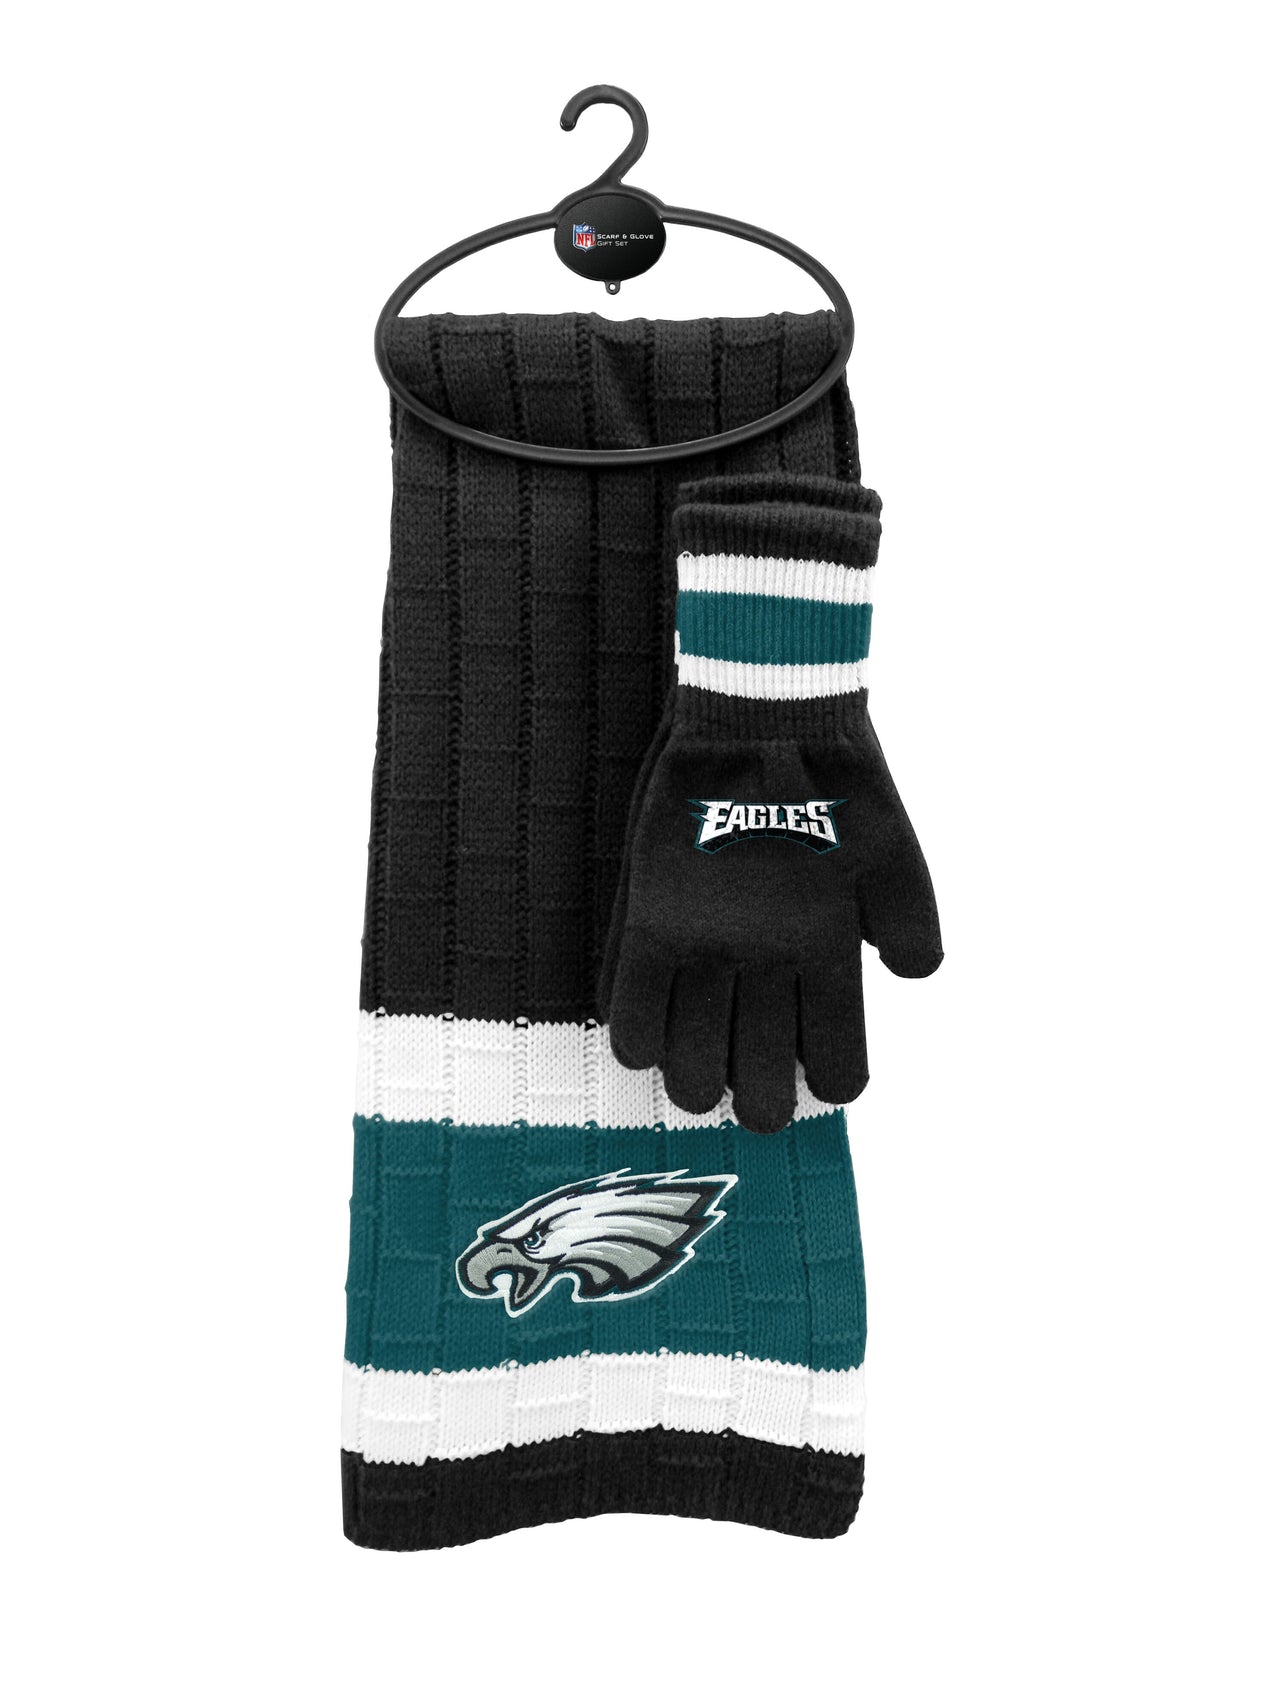 Philadelphia Eagles Scarf Glove Gift Set - Dynasty Sports & Framing 